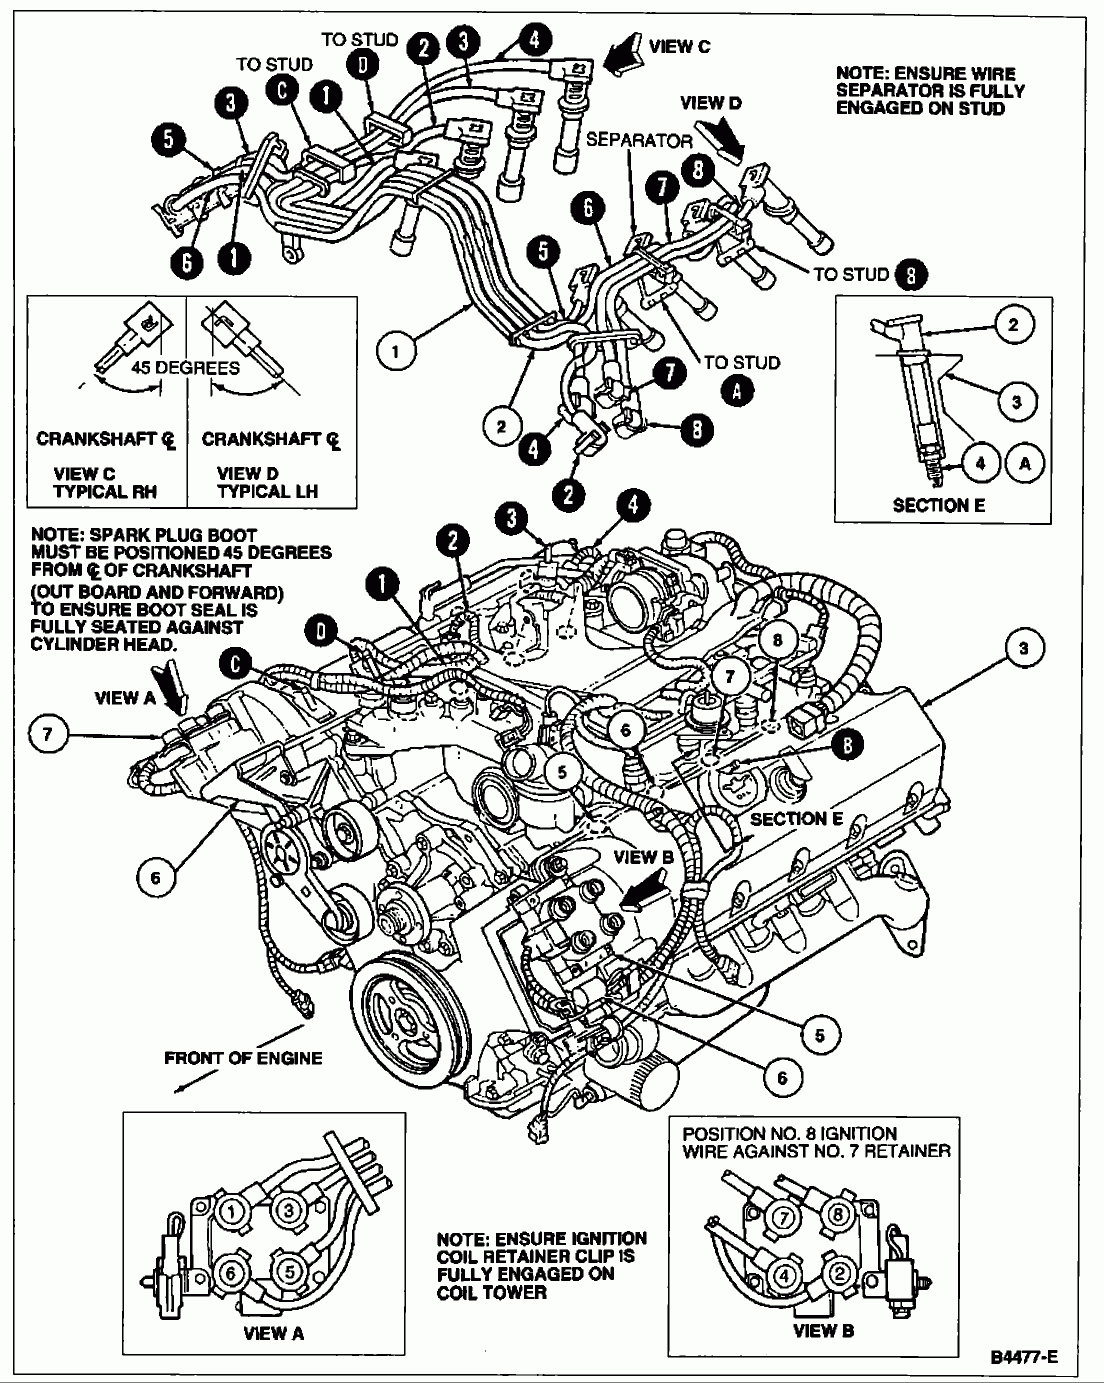 Diagram] Honda Spark Plug Wire Diagram Full Version Hd